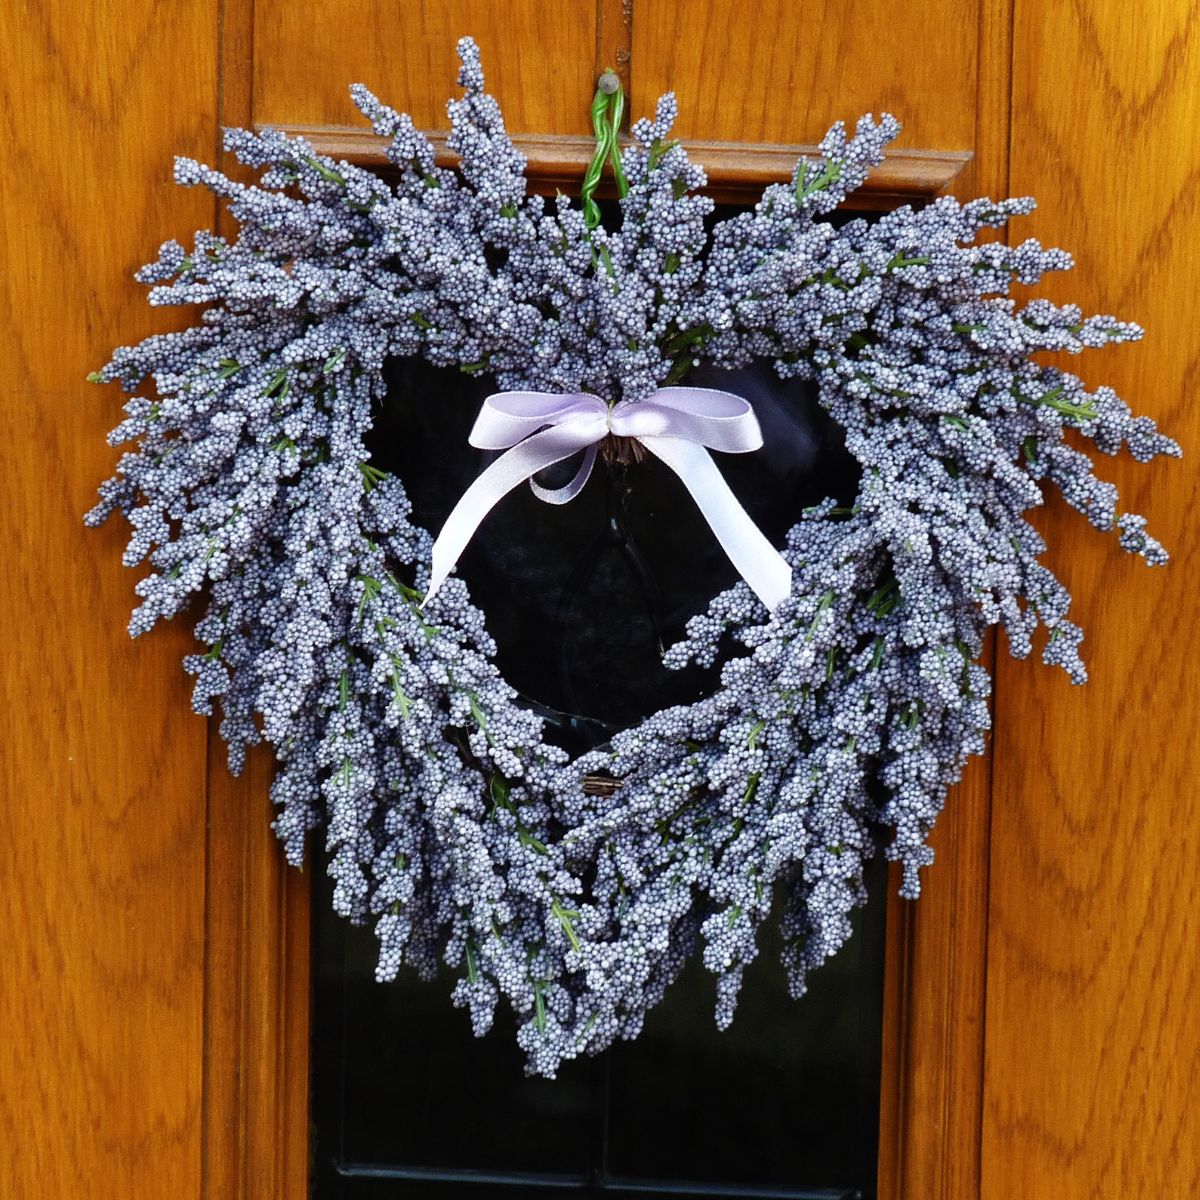 Heart-shaped lavender wreath.